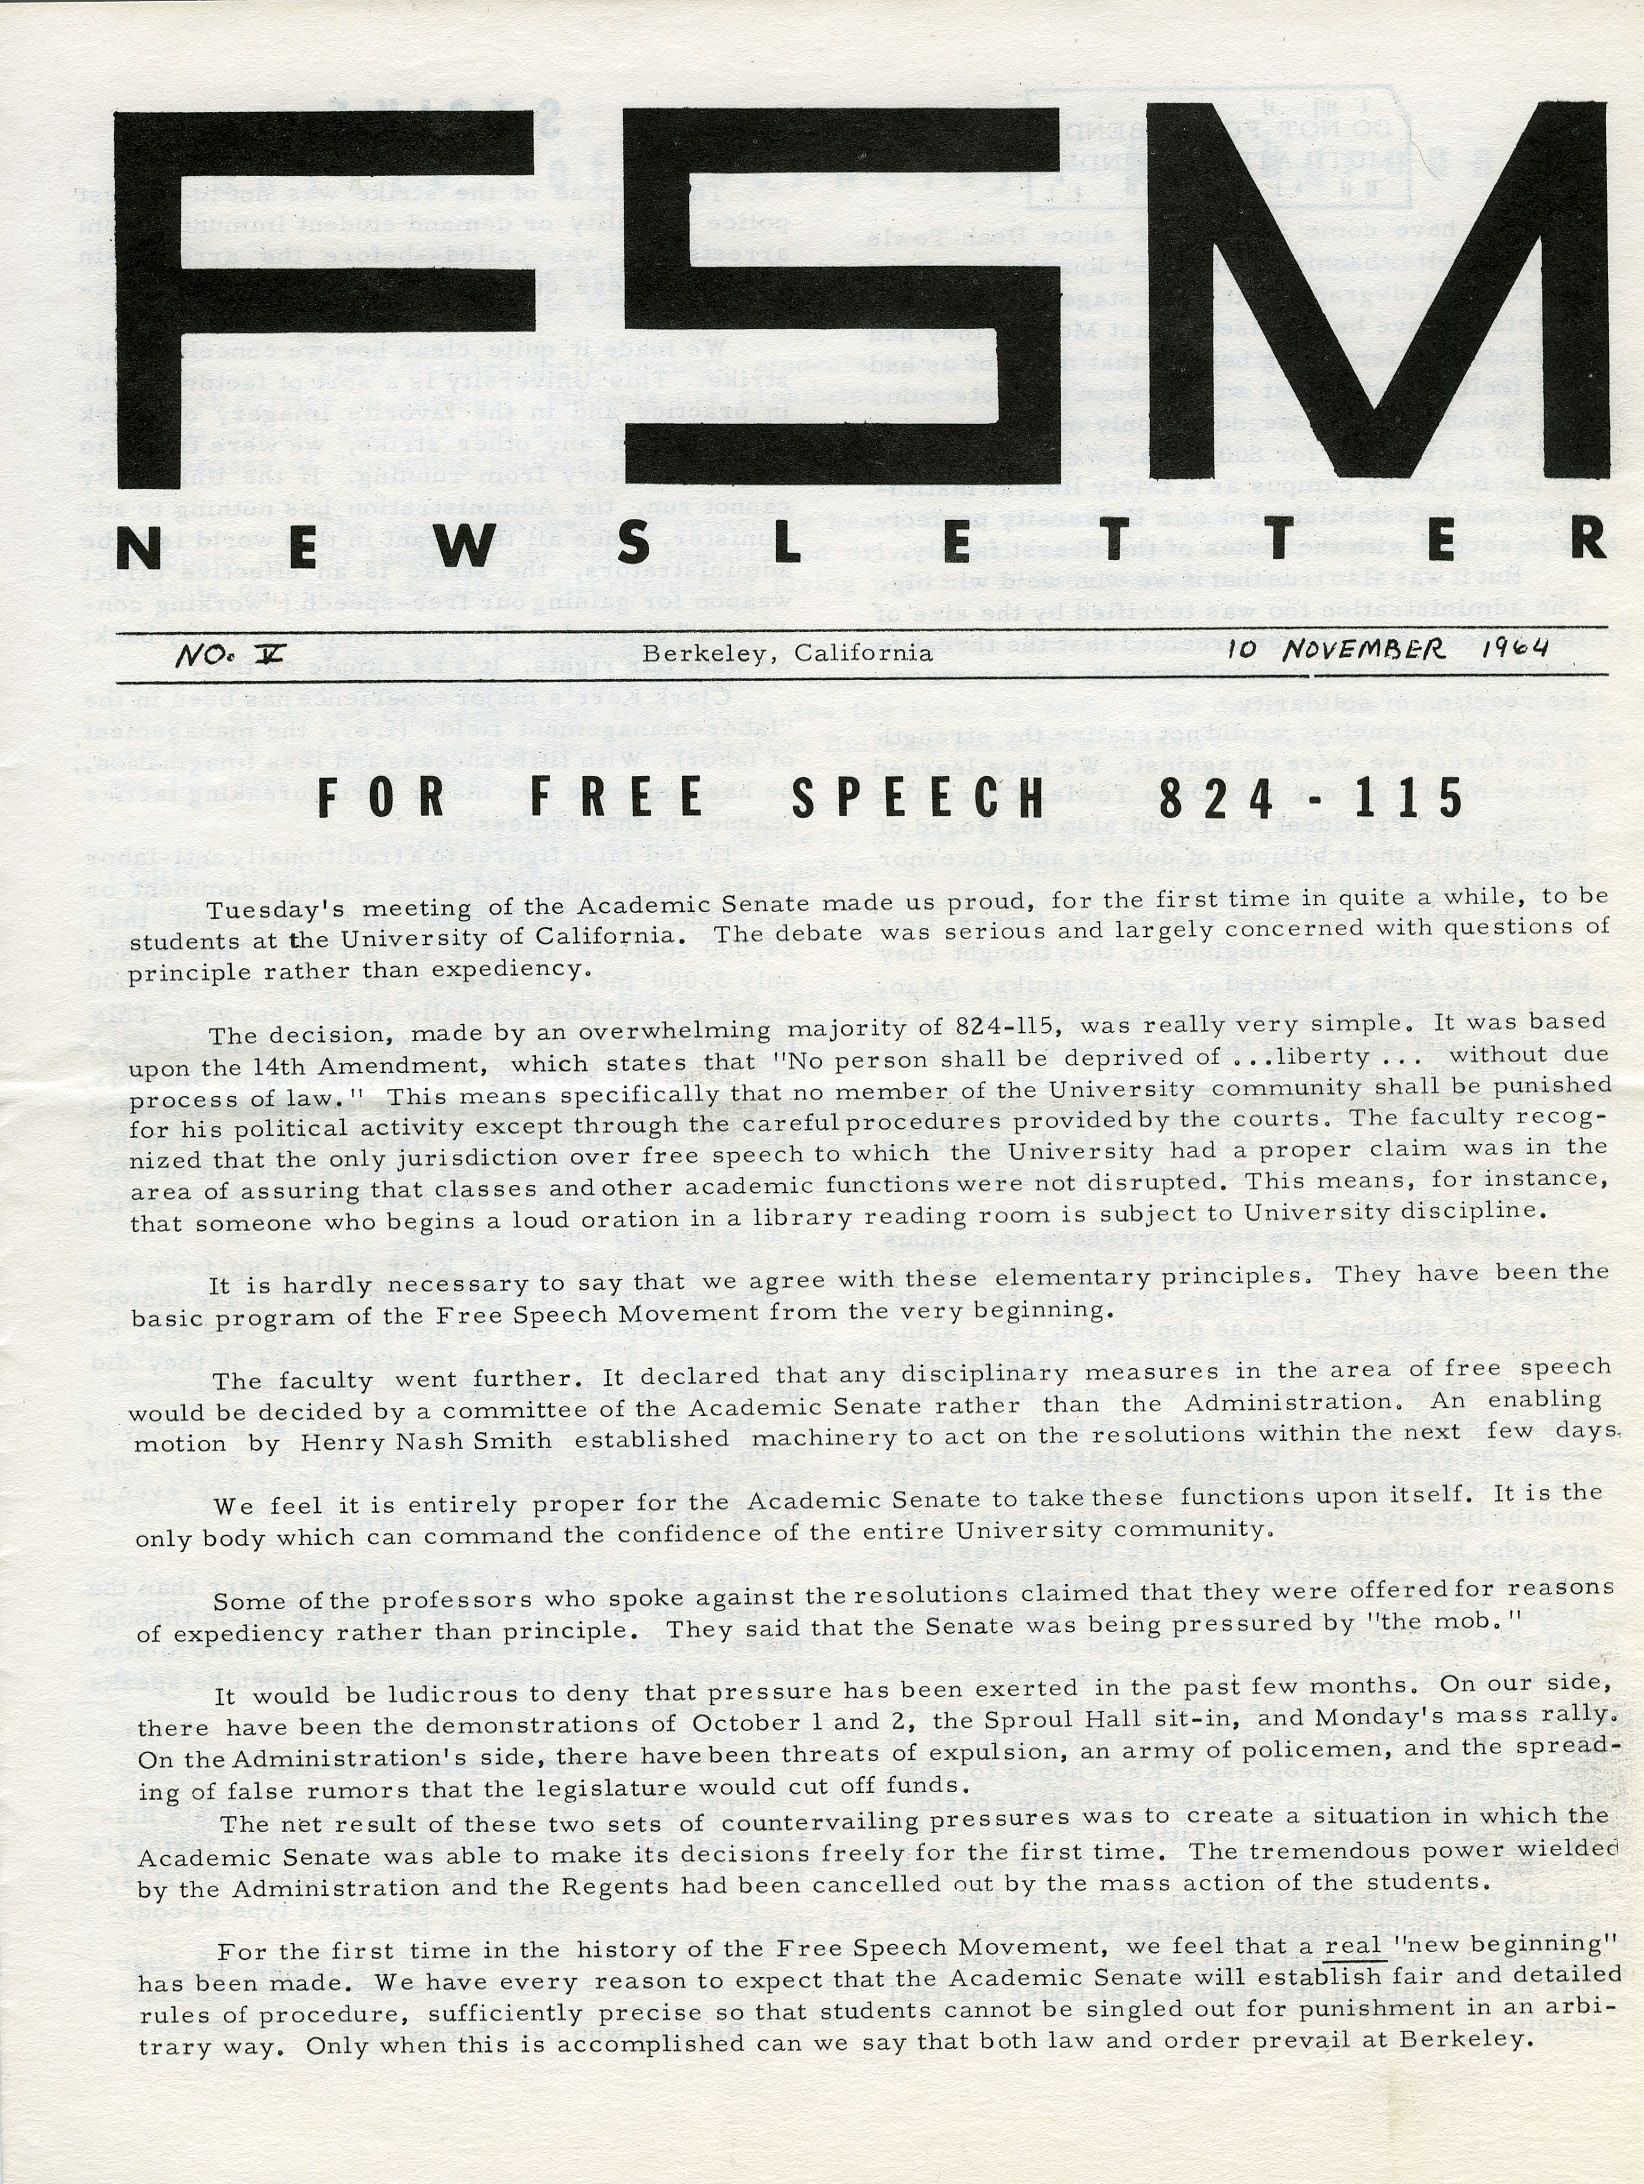 Depiction of Free Speech Movement newsletter